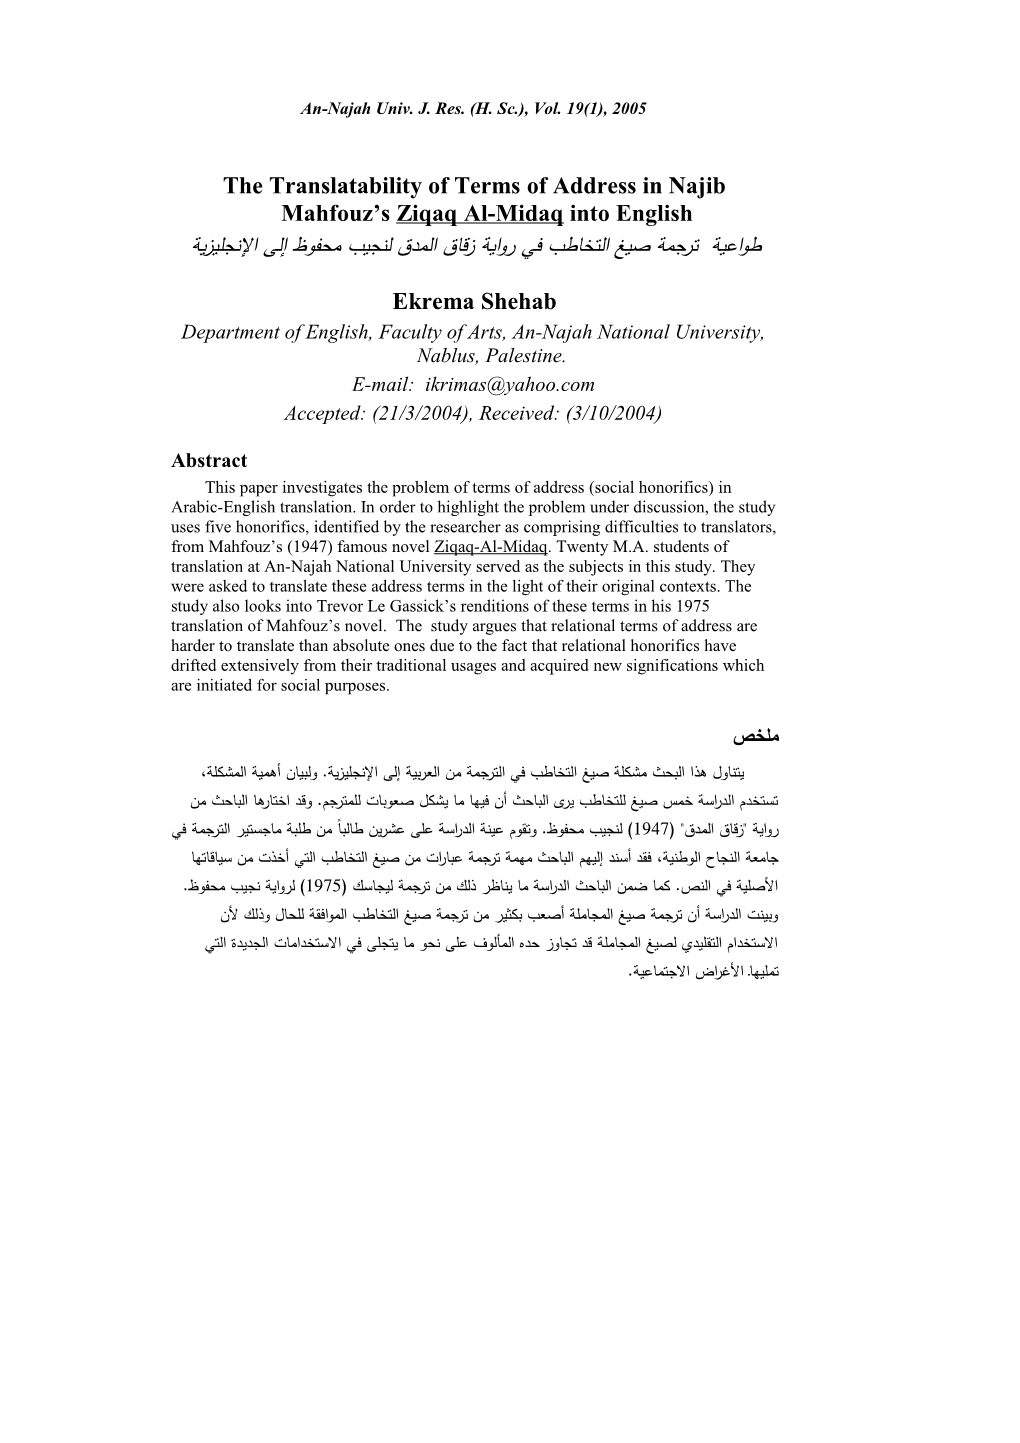 The Problem Of Social Honorifics In Arabic-English Translation